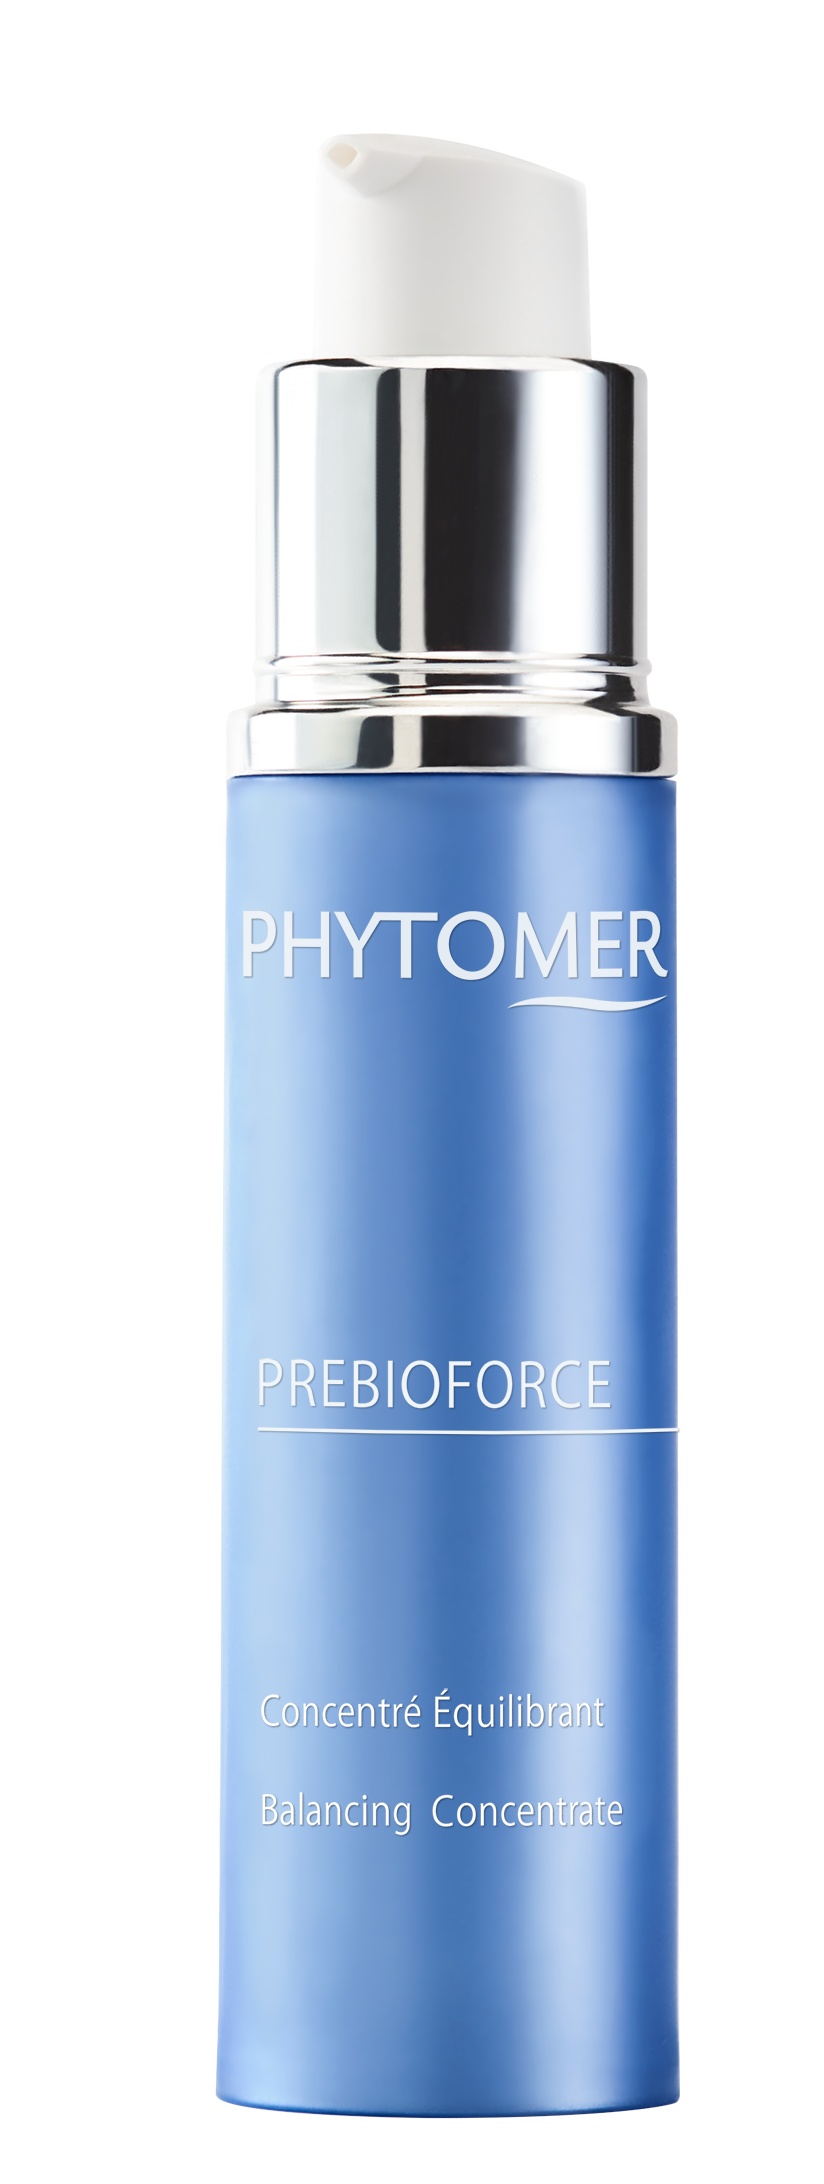 Phytomer Prebioforce Balancing Concentrate